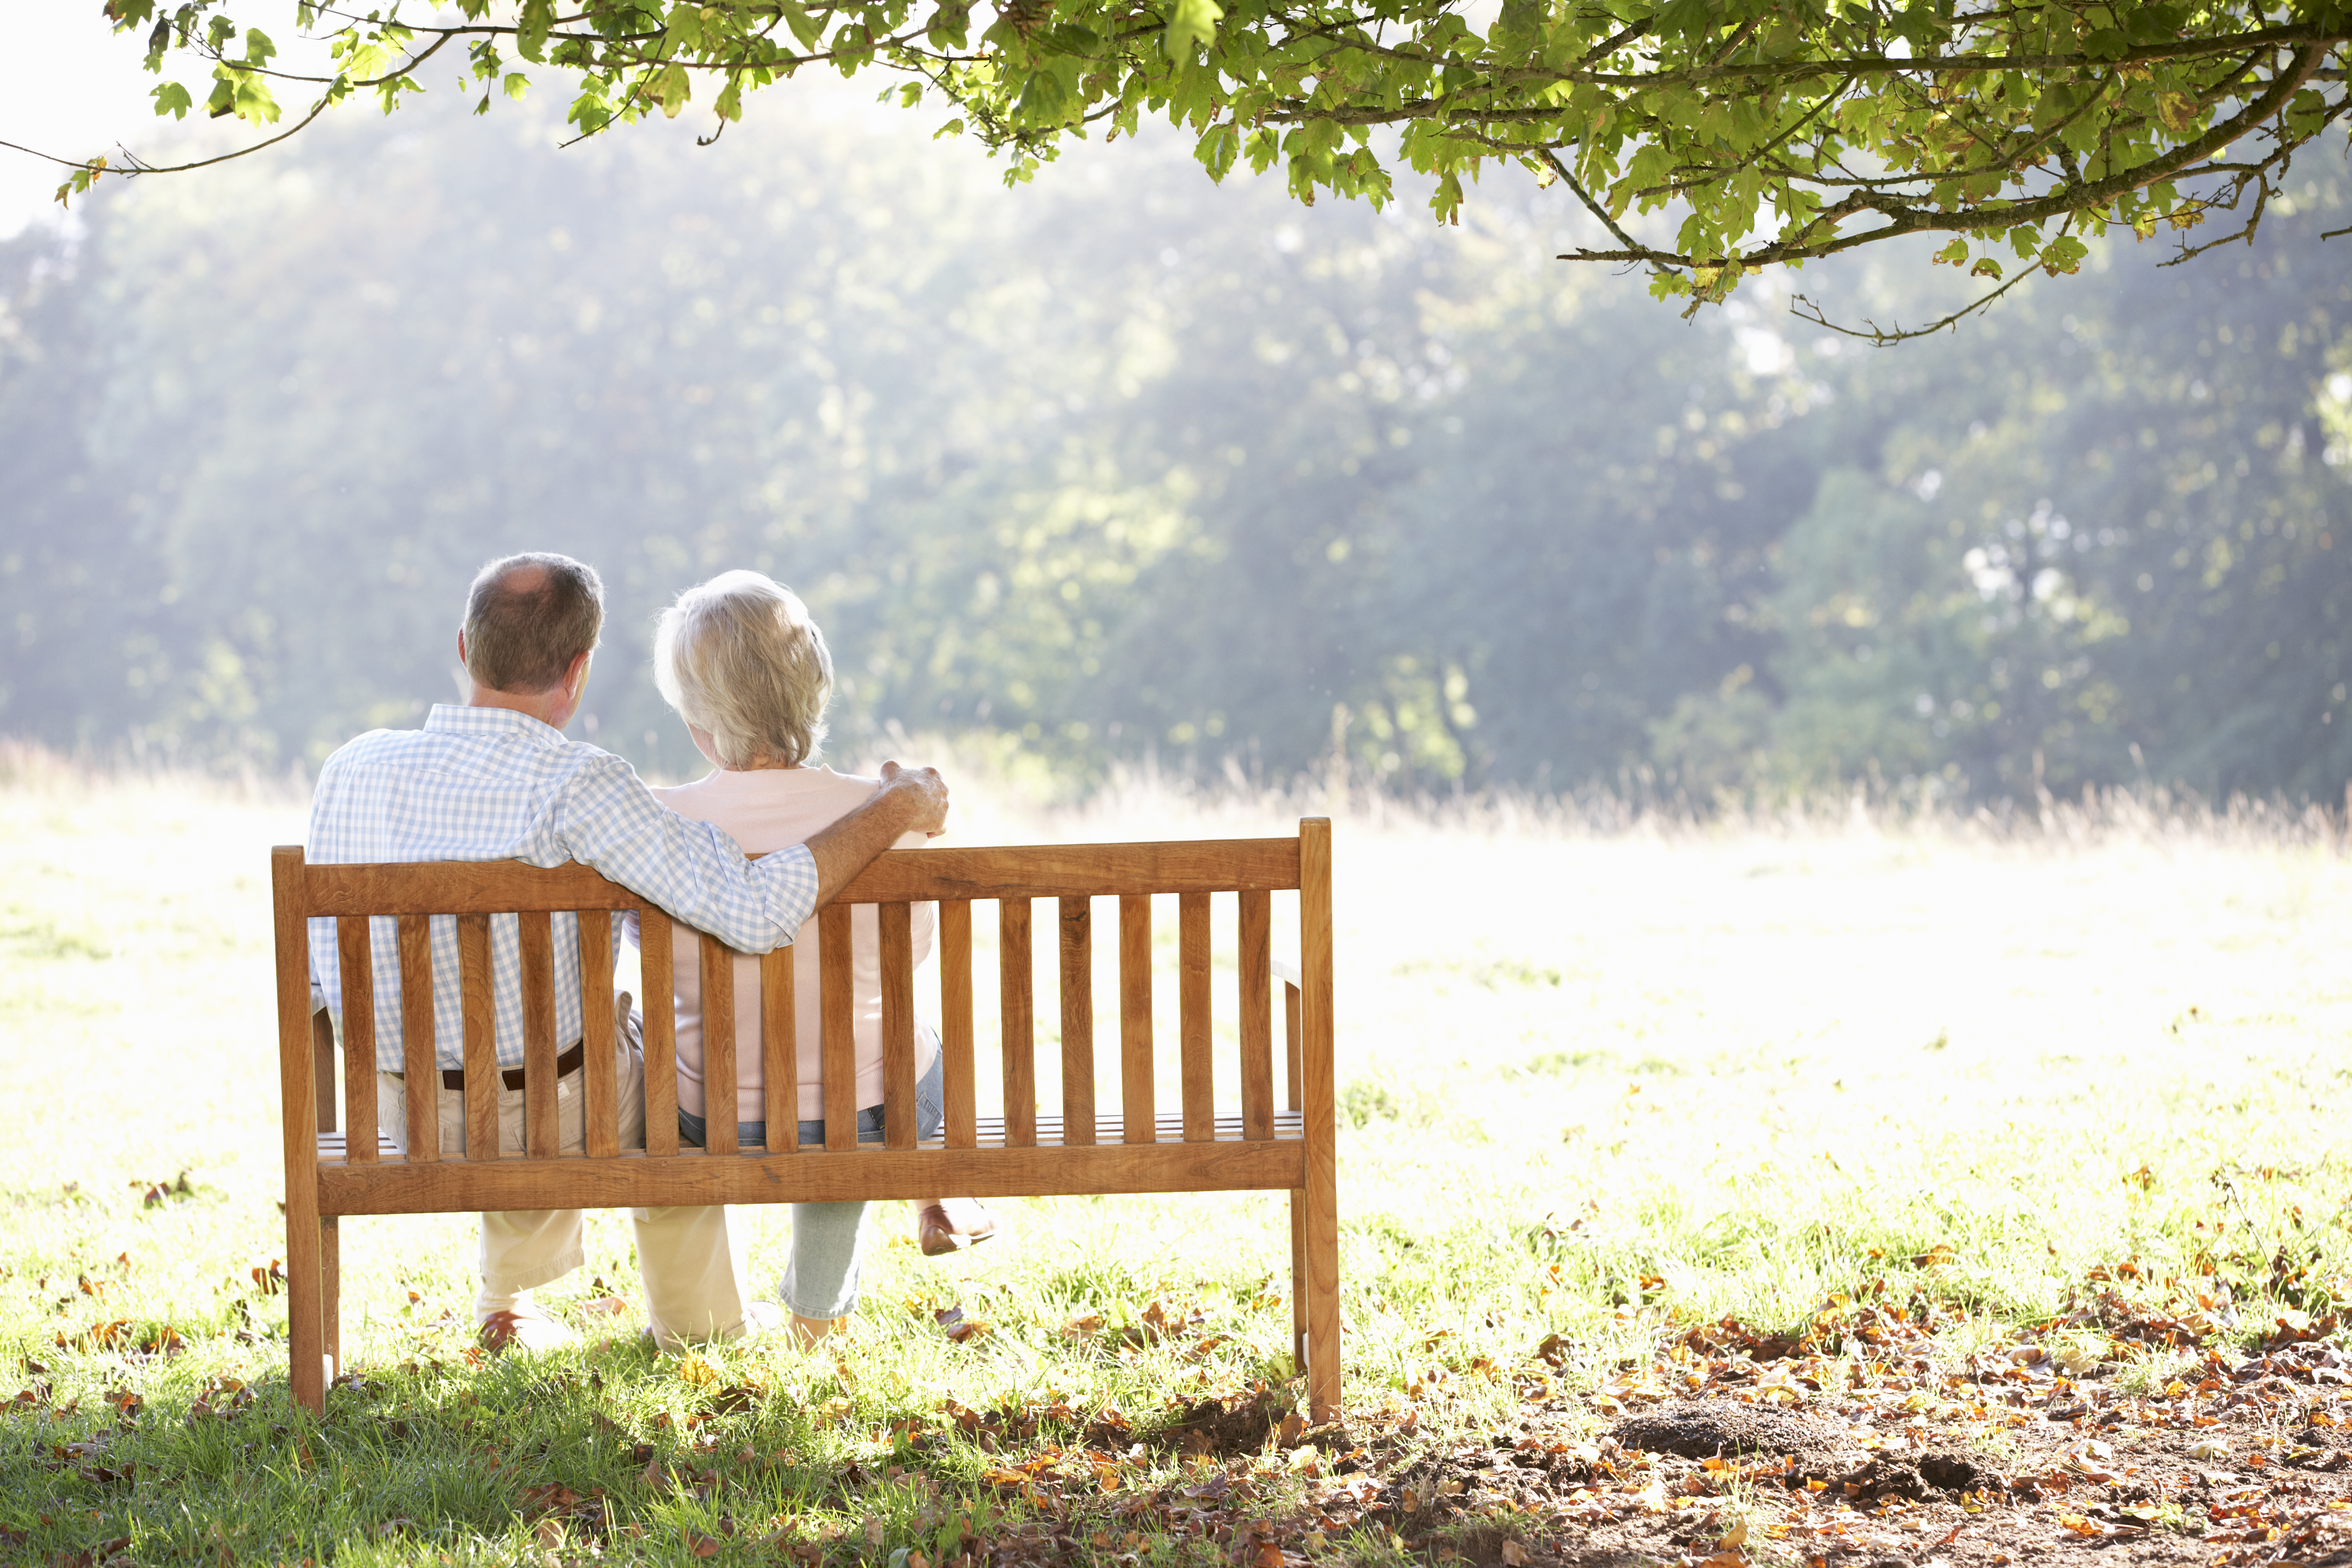 Senior couple sitting outdoors